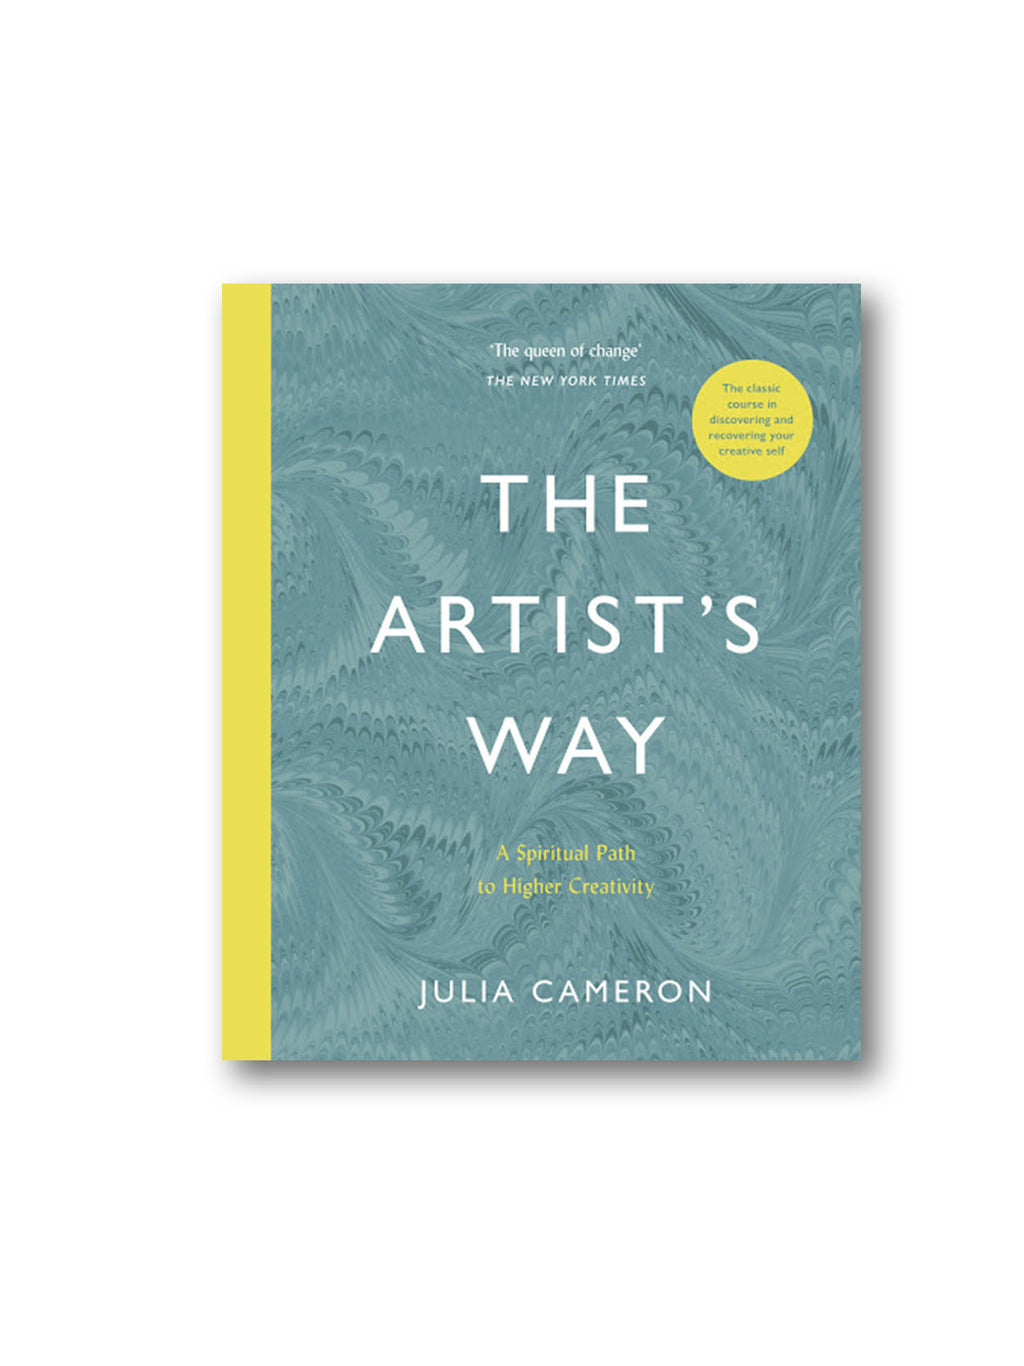 The Artist's Way : A Spiritual Path to Higher Creativity